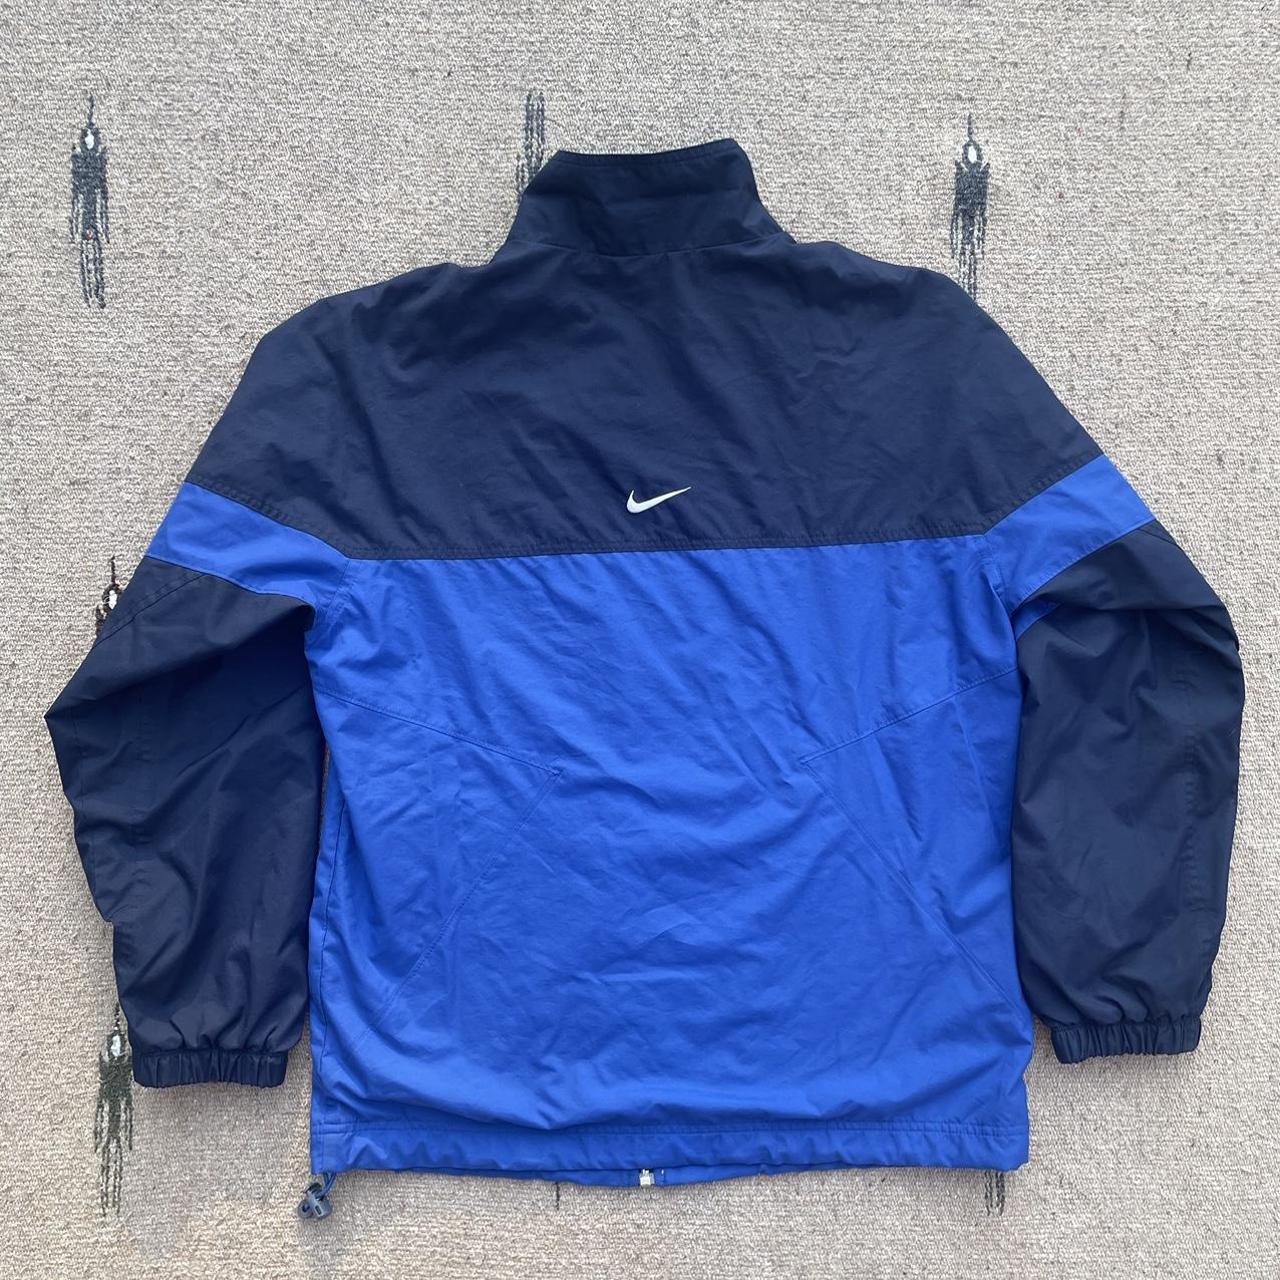 Nike Men's Navy and Blue Jacket (5)